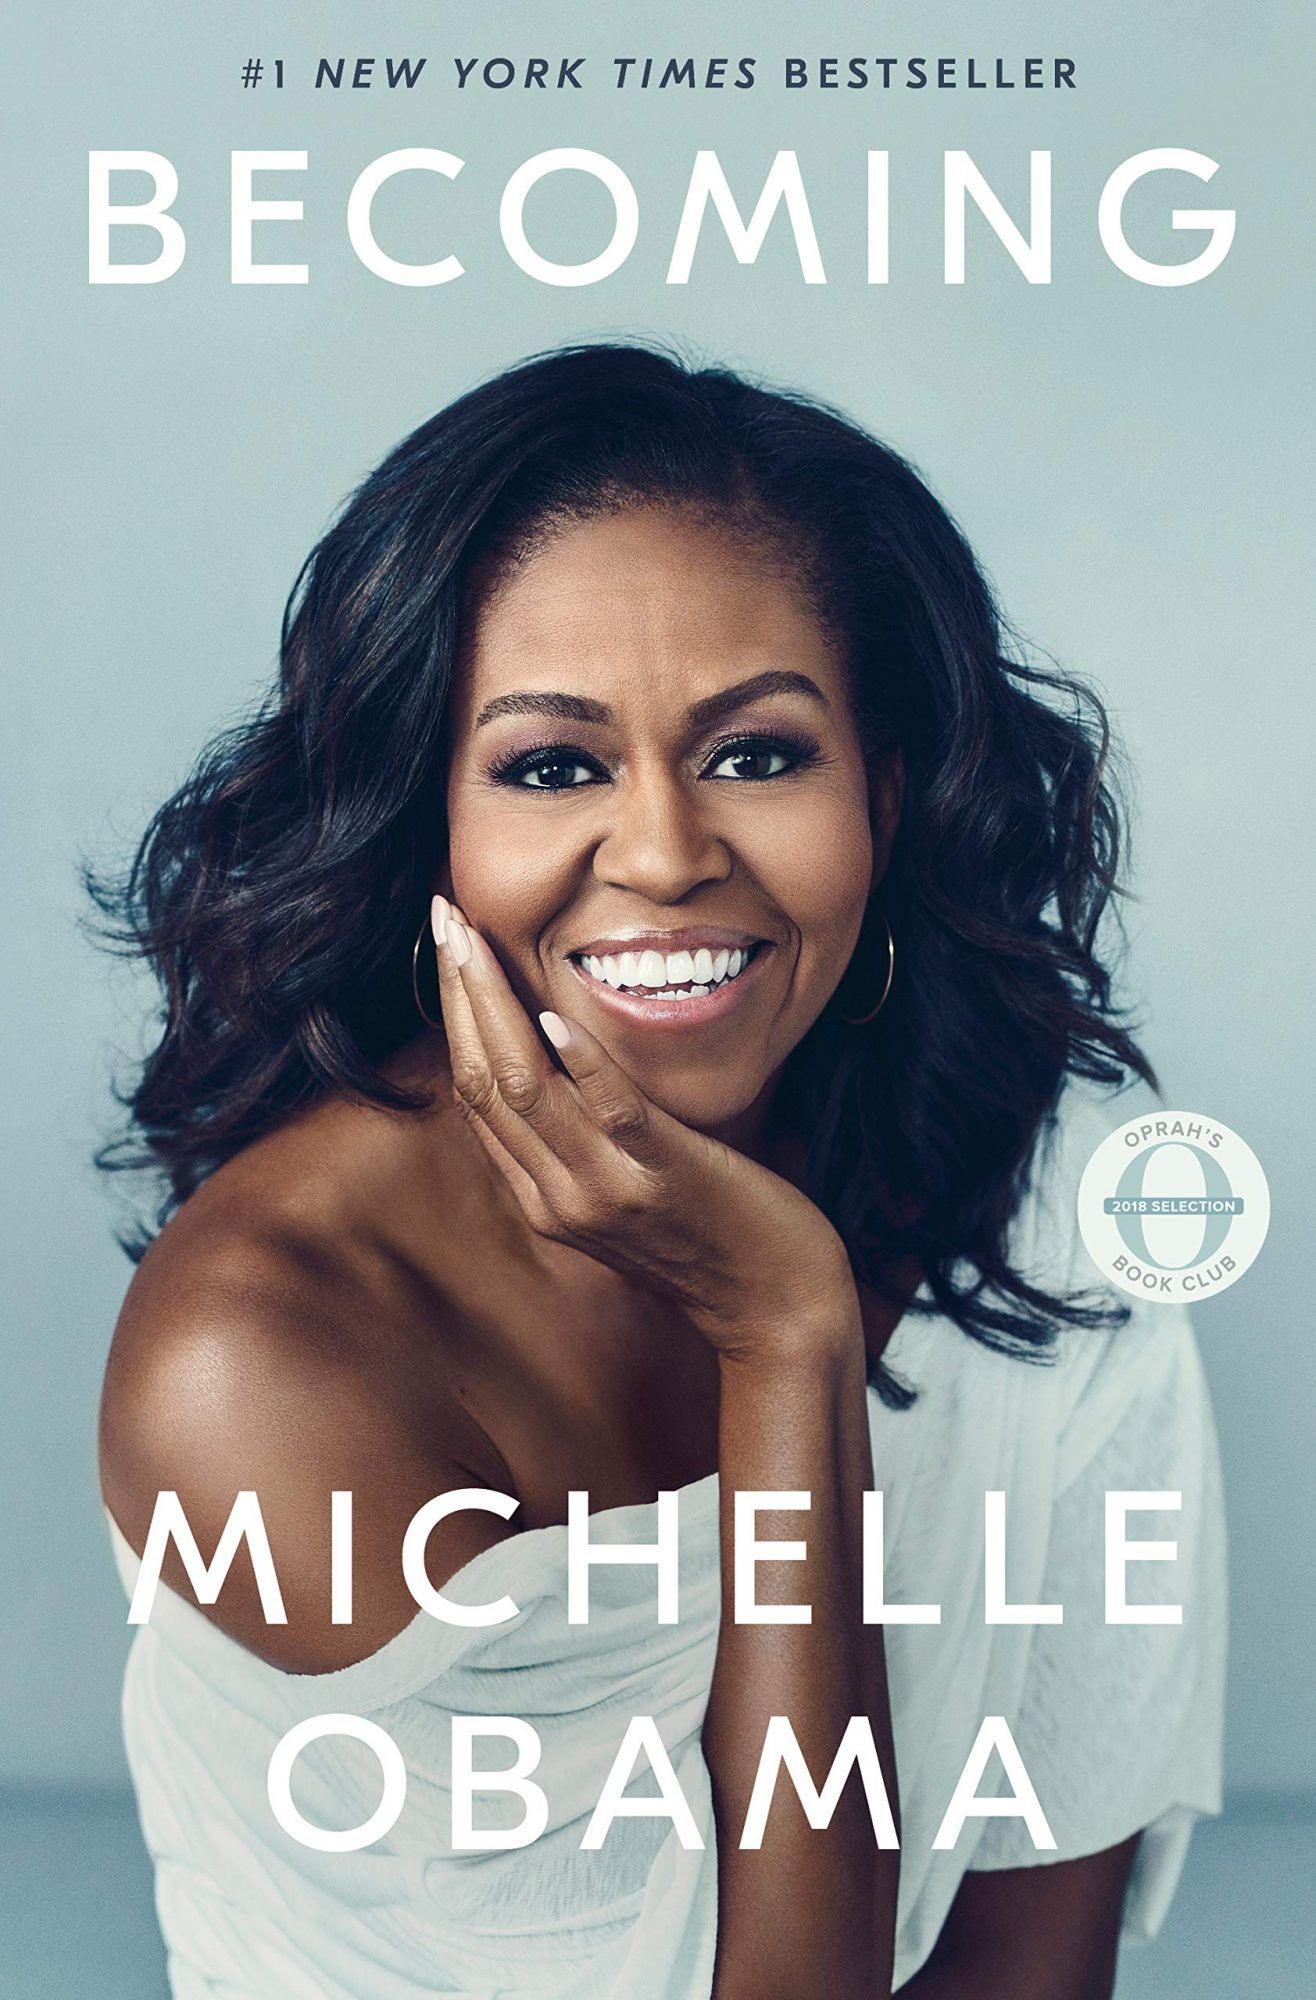 Livros de autocuidado, Becoming, de Michelle Obama